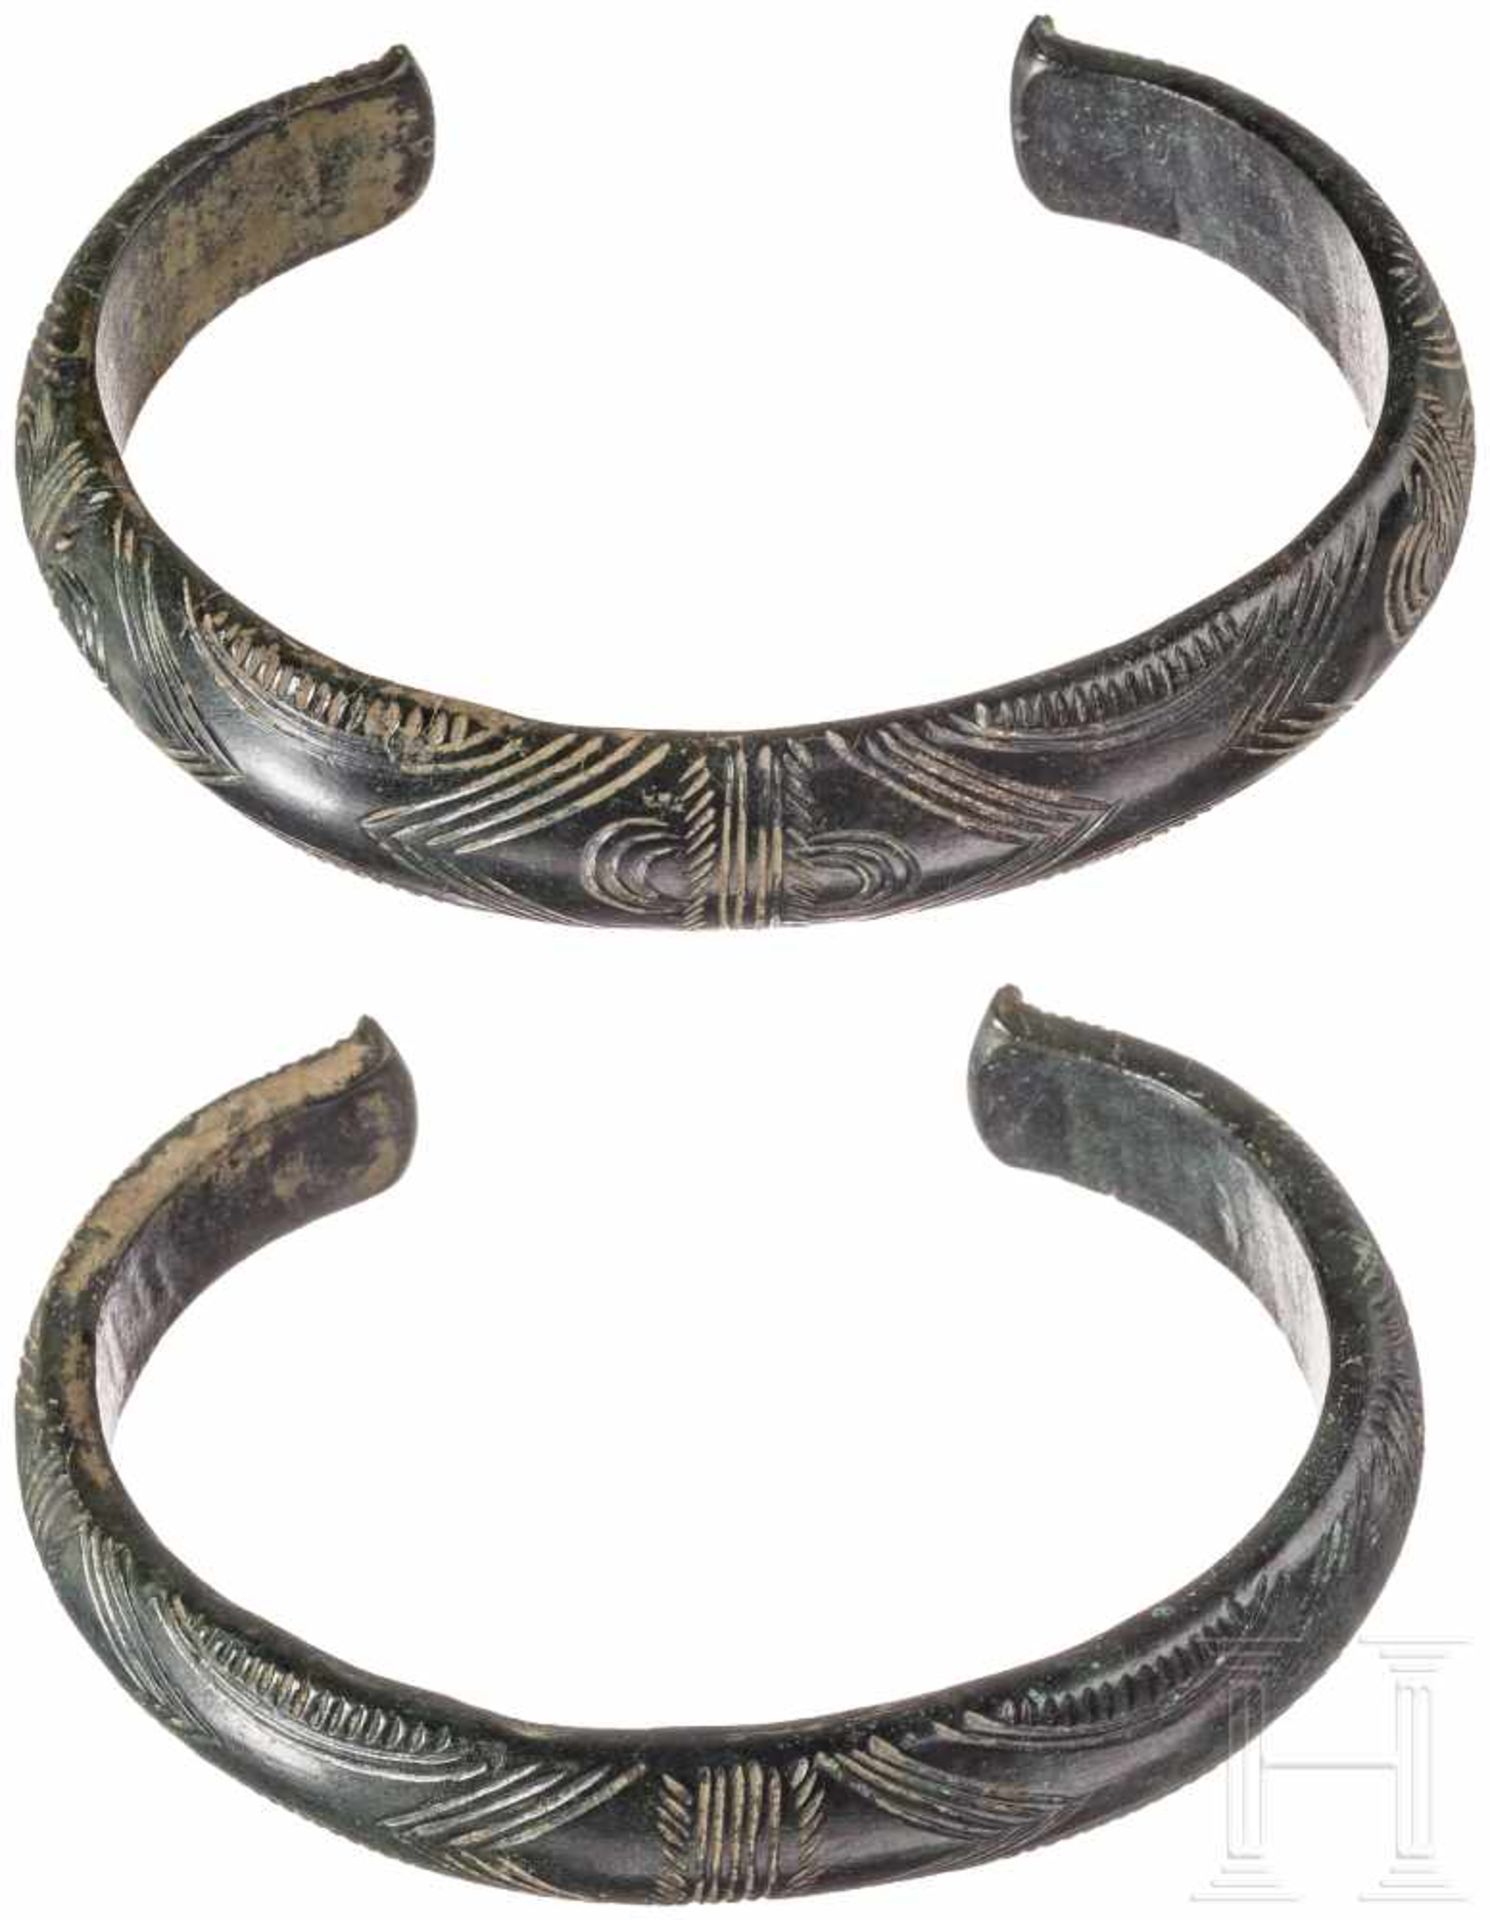 Ein Paar verzierte Armreife, Bronzezeit, 12. - 11. Jhdt. v. Chr.Ein Paar offene ovale Bronzearmreife